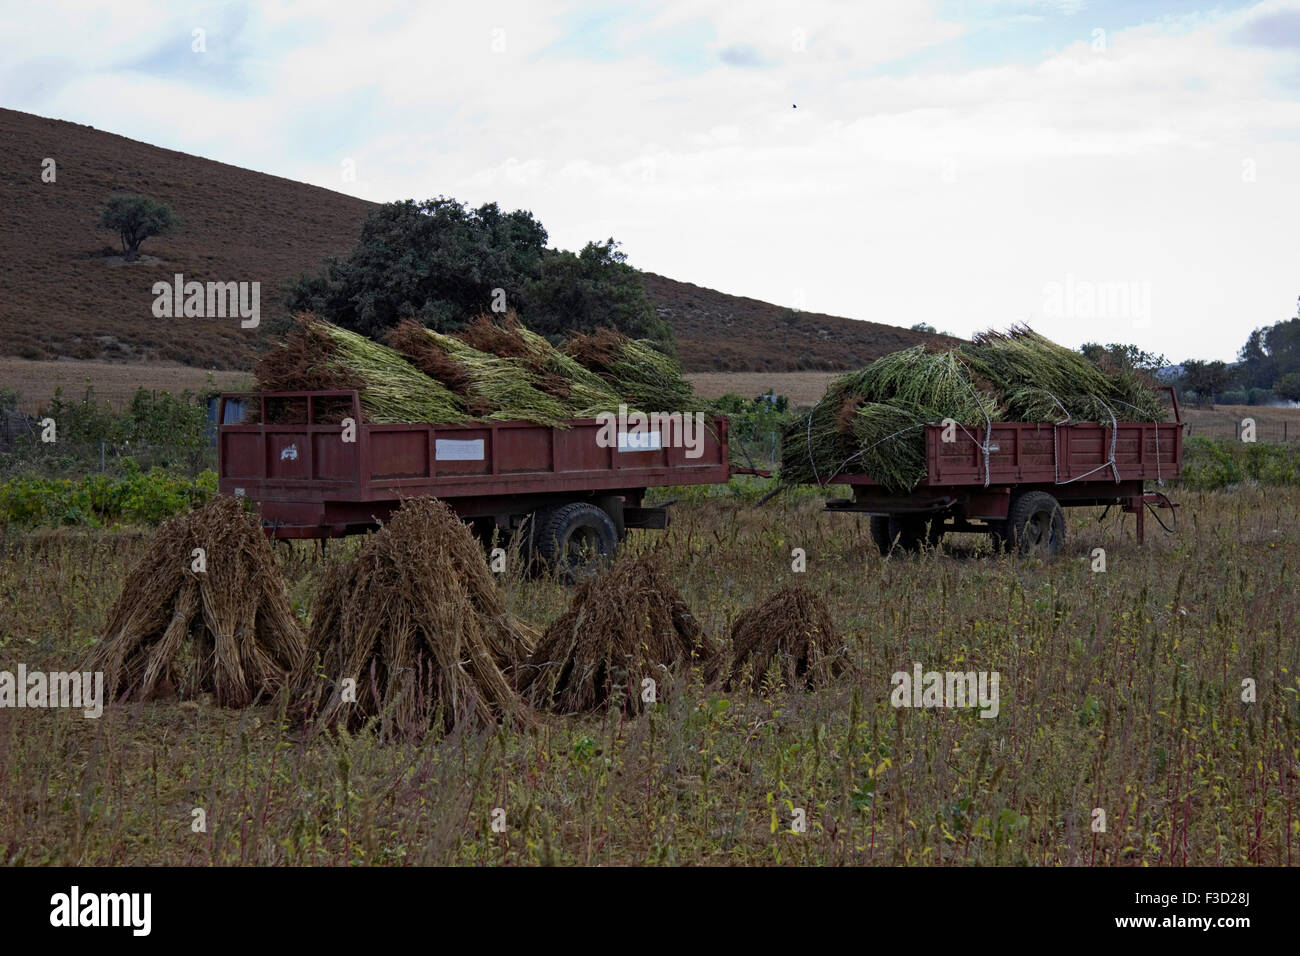 Sesame seedpods plants loaded on coachworks. Limnos or lemnos island, Greece Stock Photo